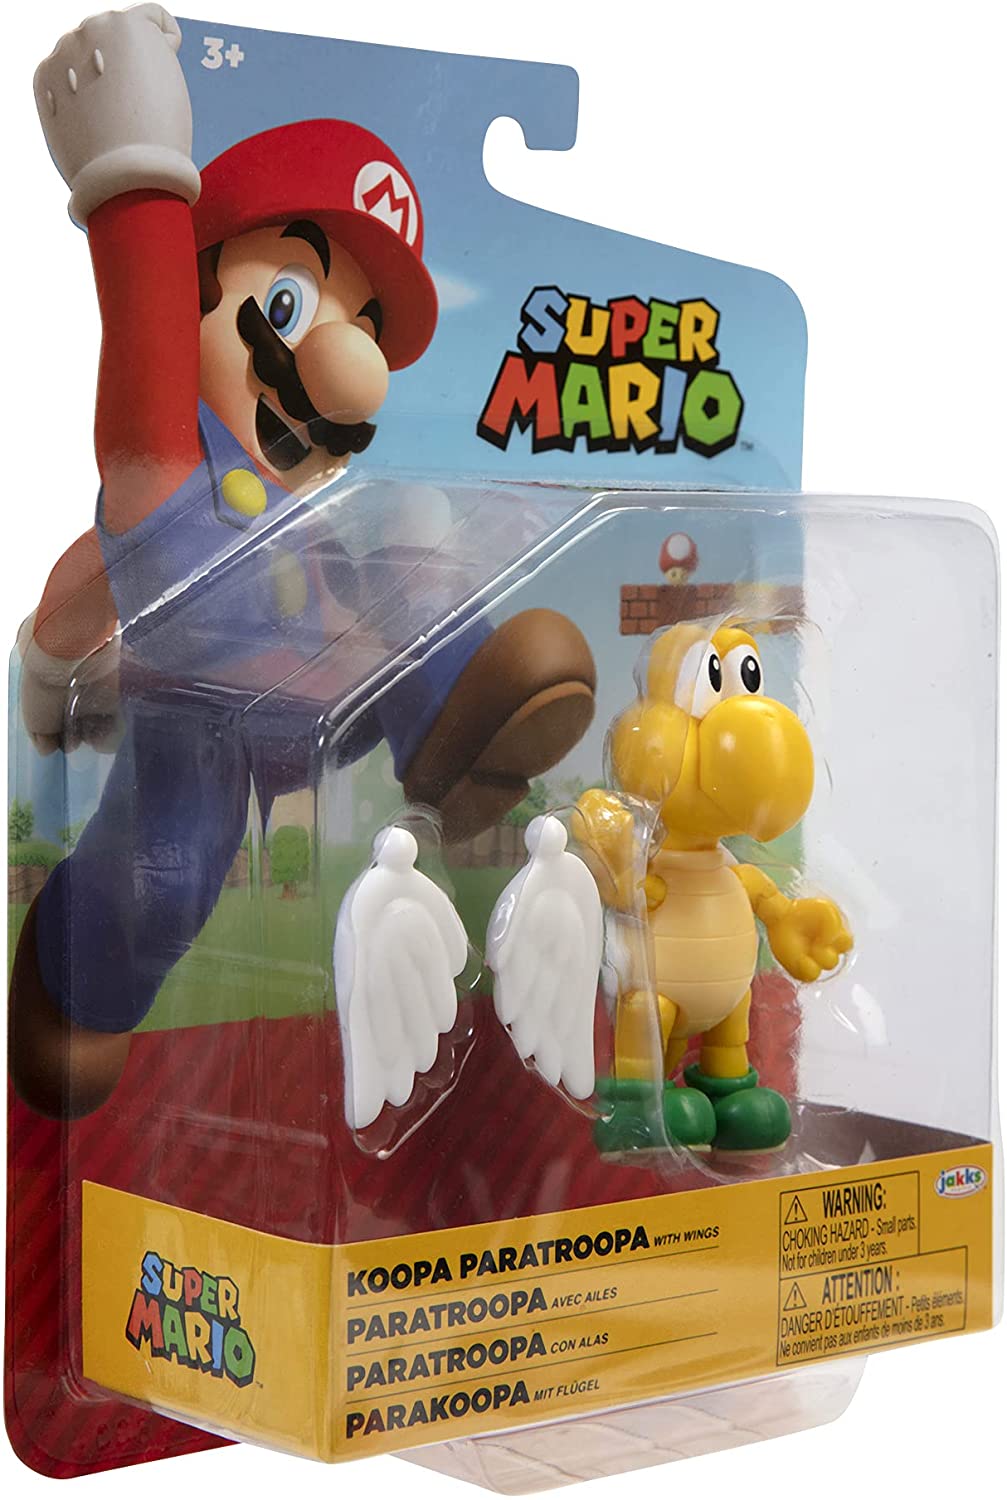 Nintendo Super Mario 4" Figure - Green Para Koopa Troopa with Wings